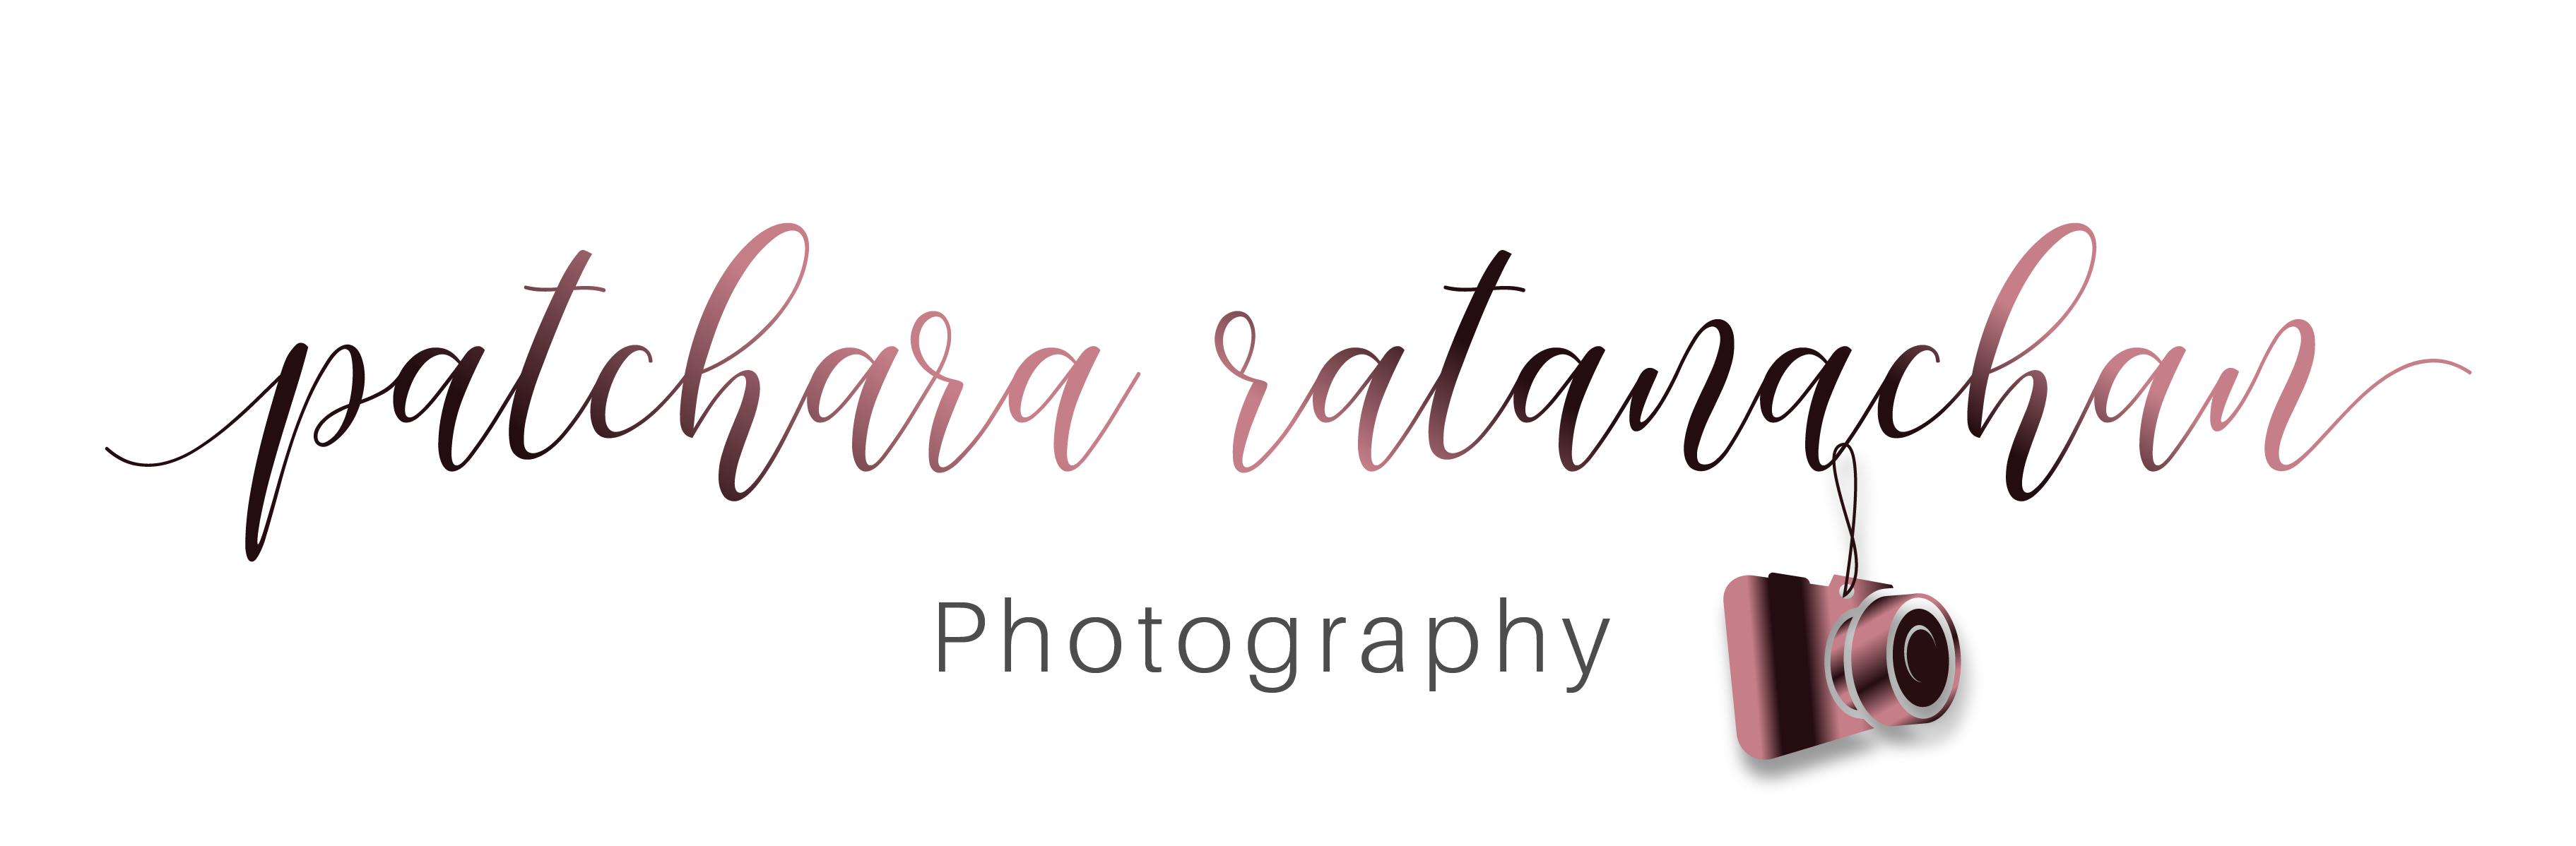 Patchara Ratanachan Photography